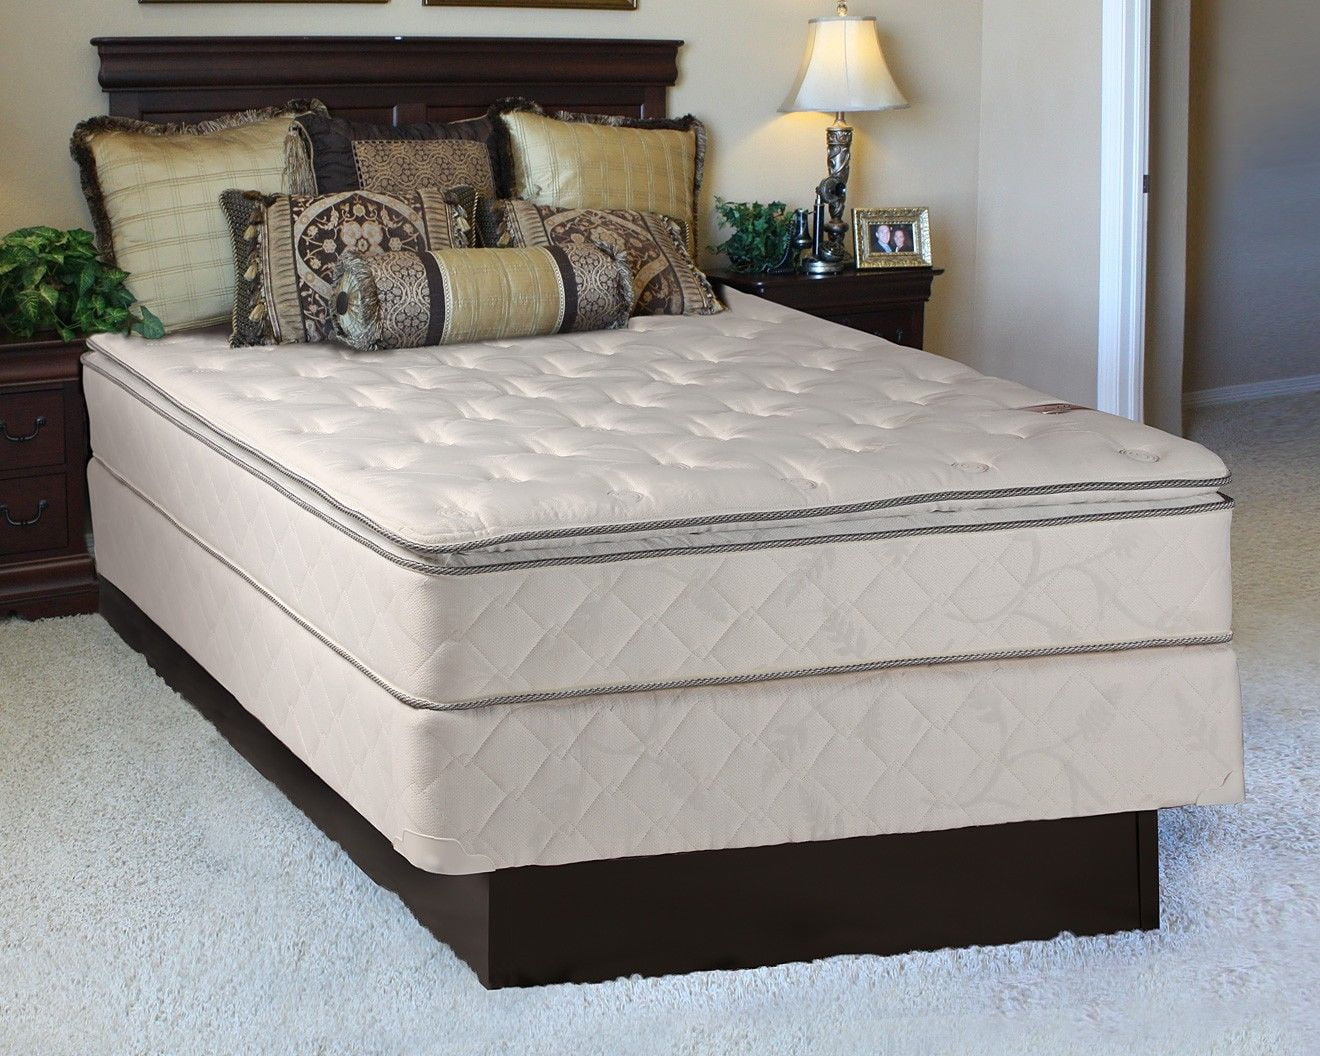 plush air mattress under 200